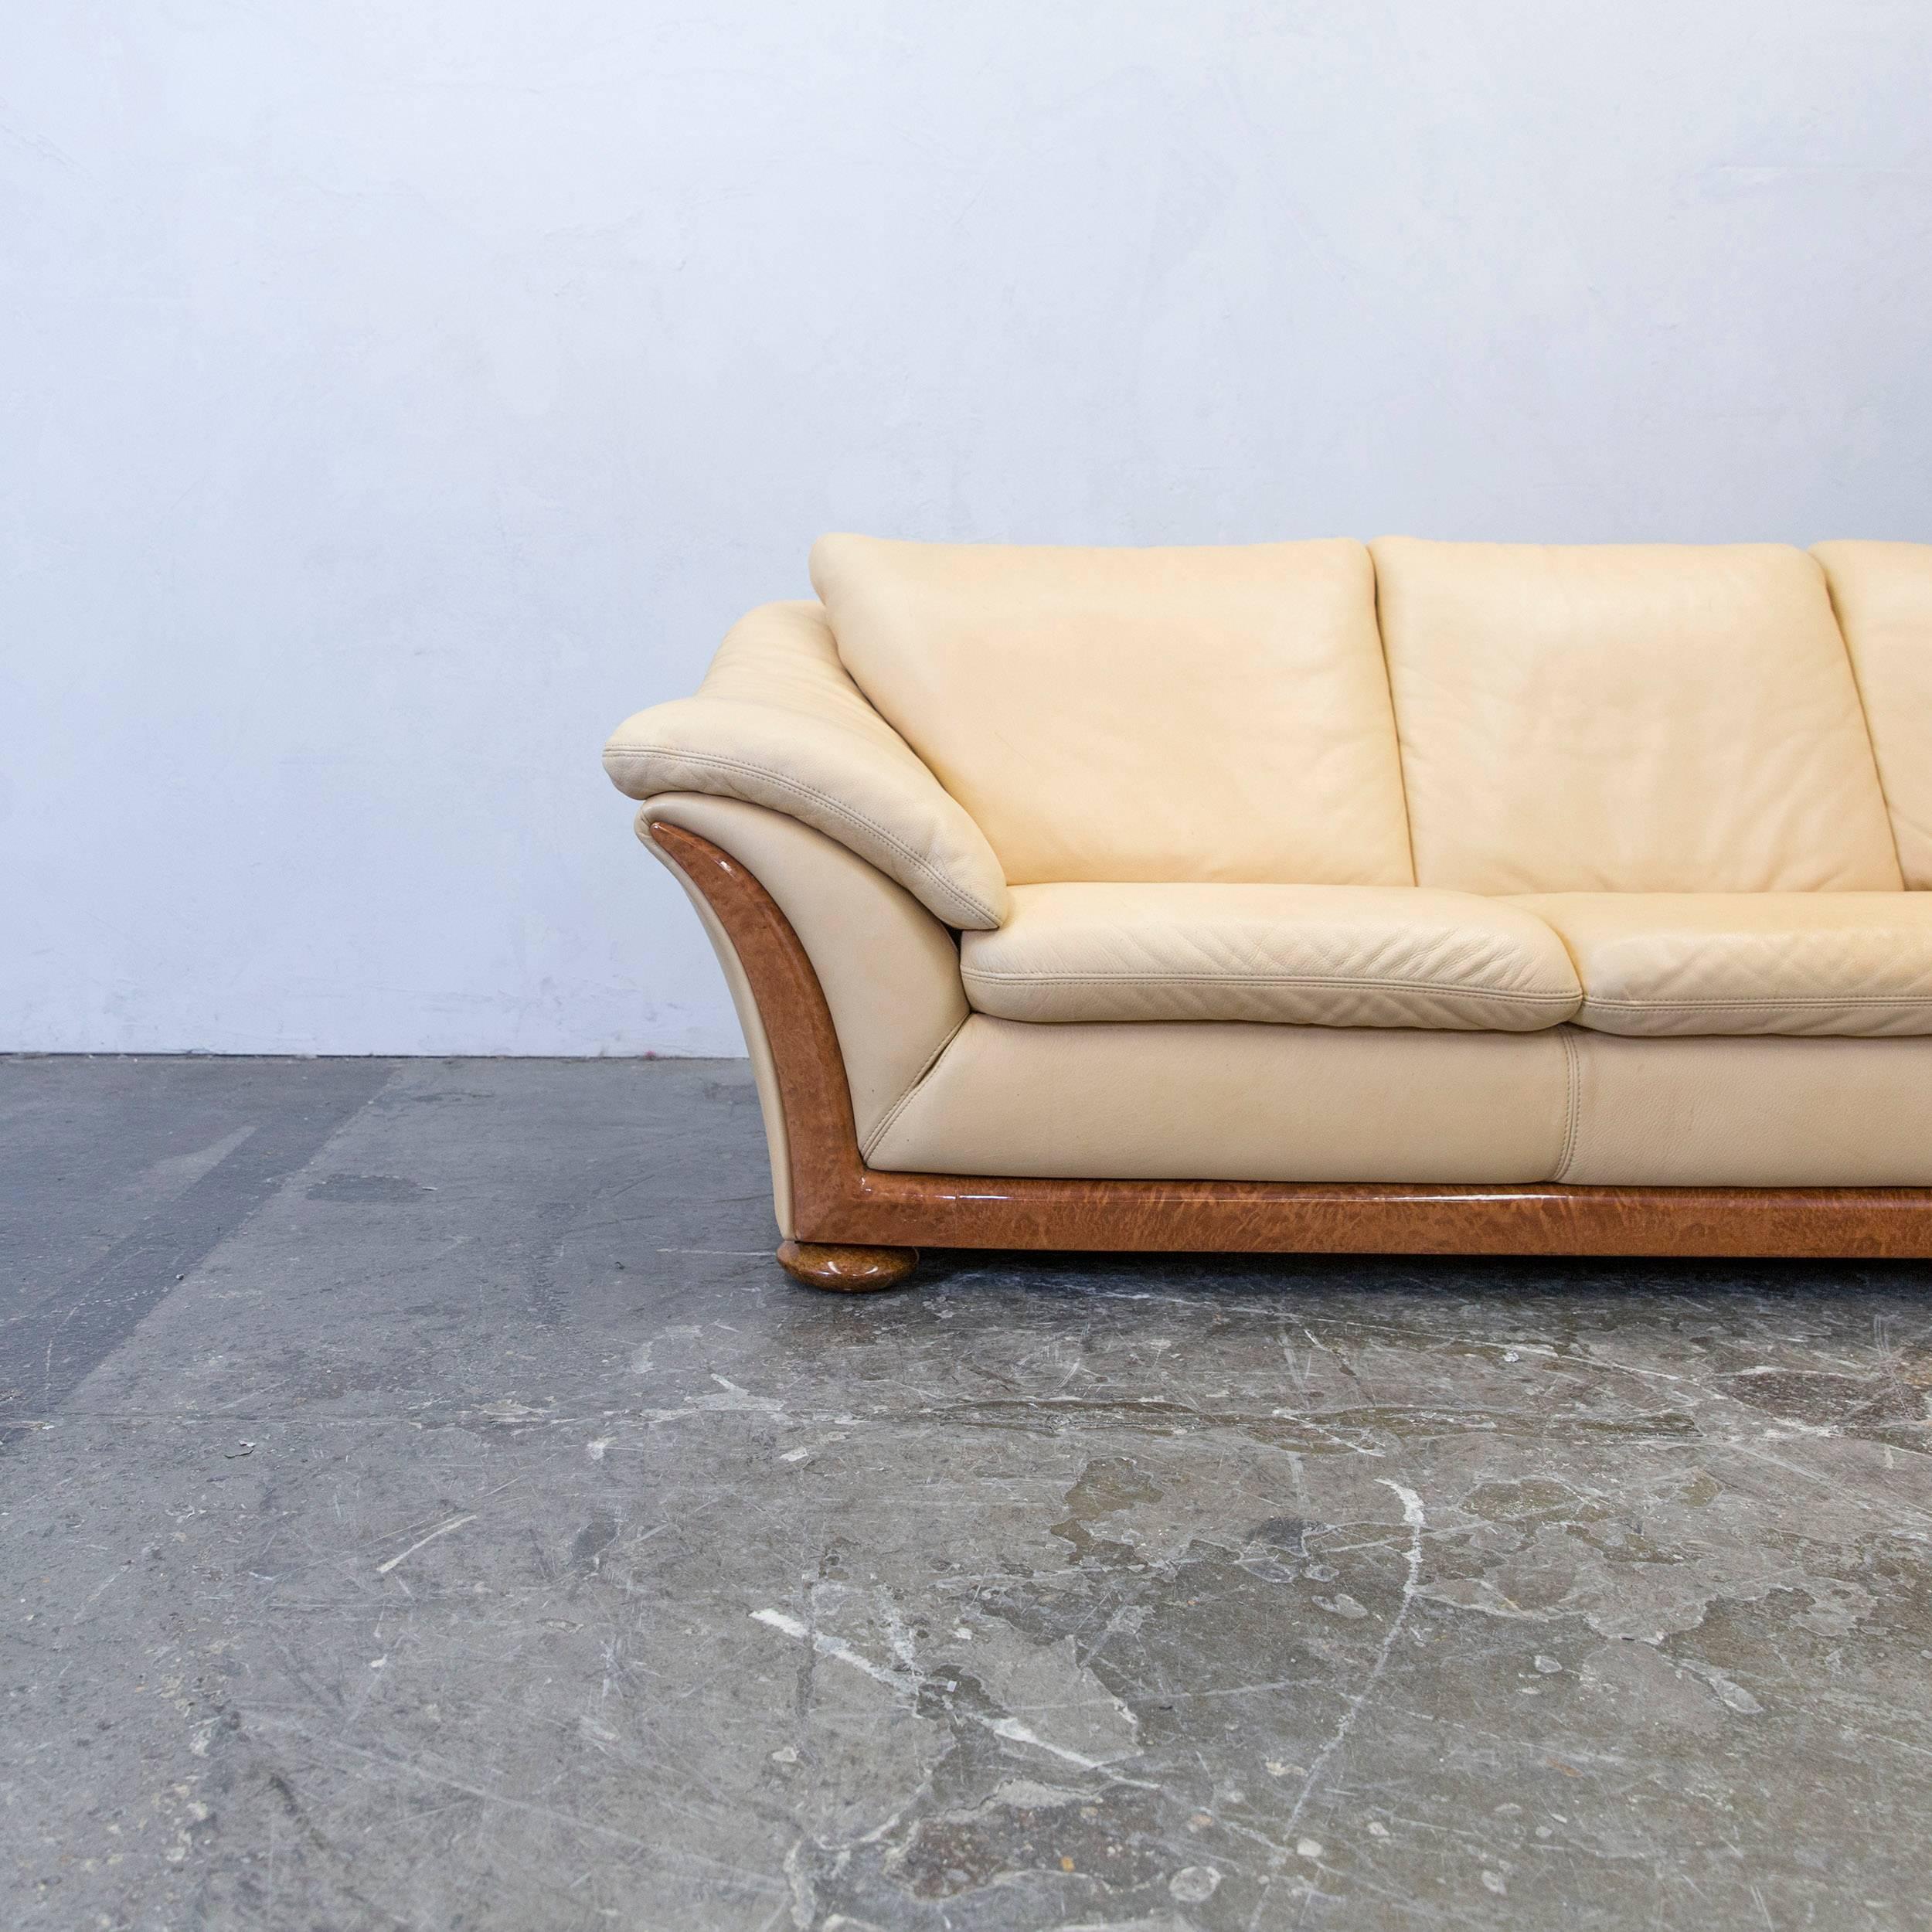 Beige colored designer corner sofa, in a minimalistic and vintage design, made for pure comfort.